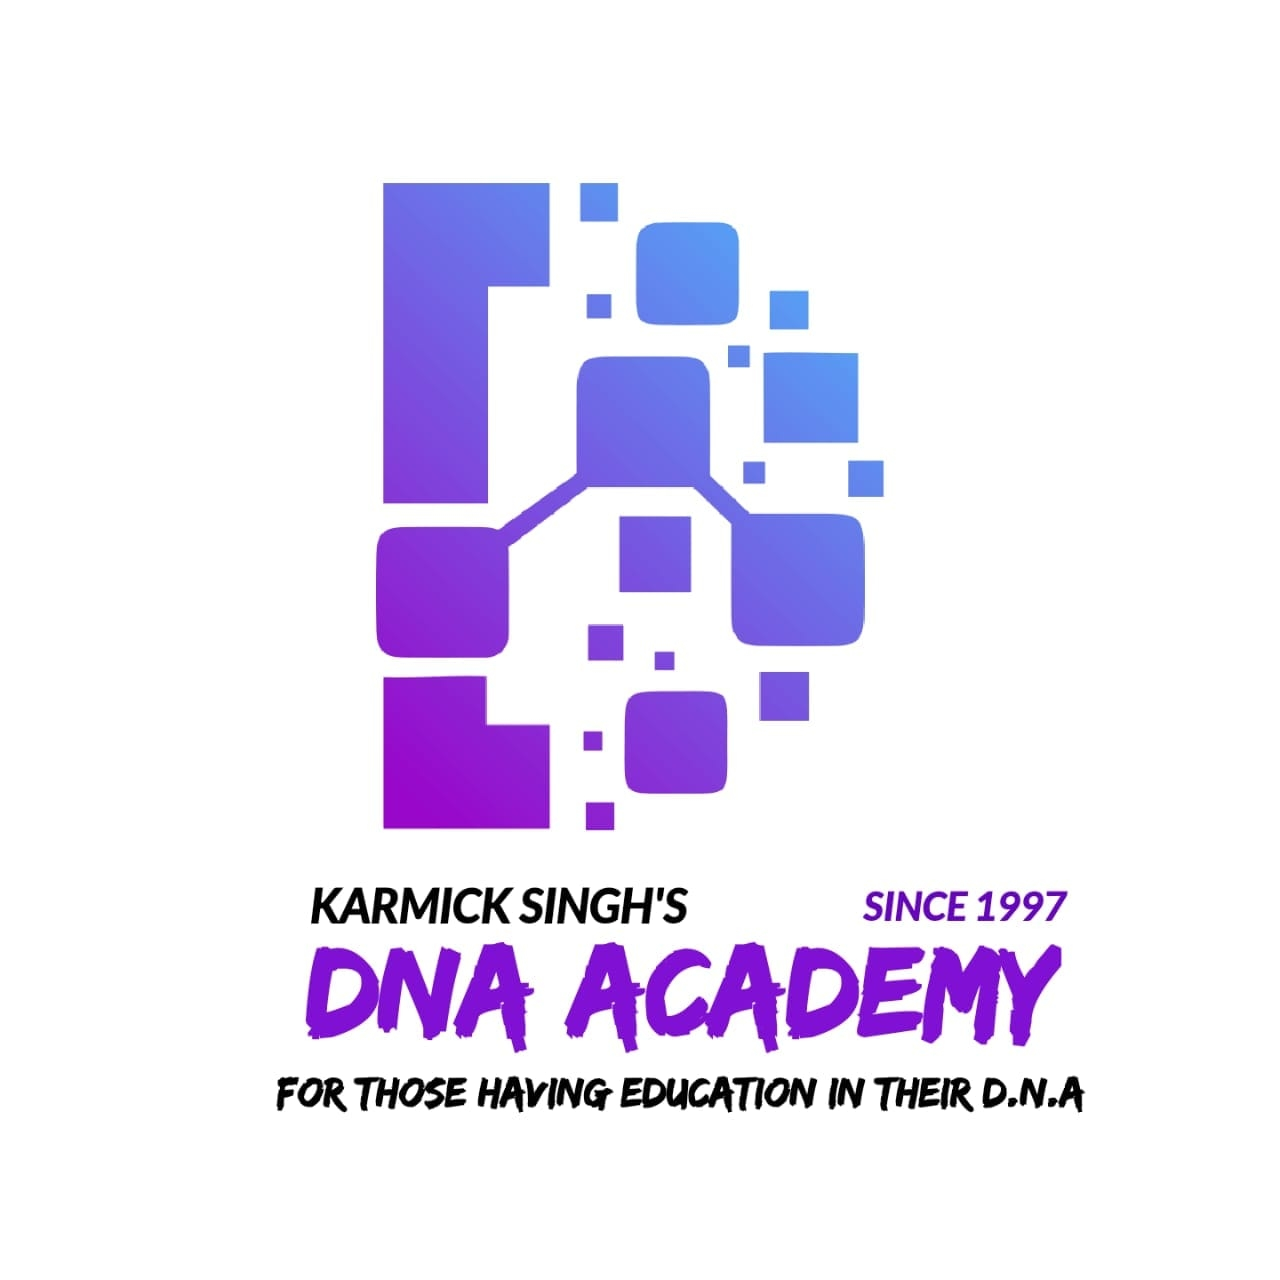 DNA Academy